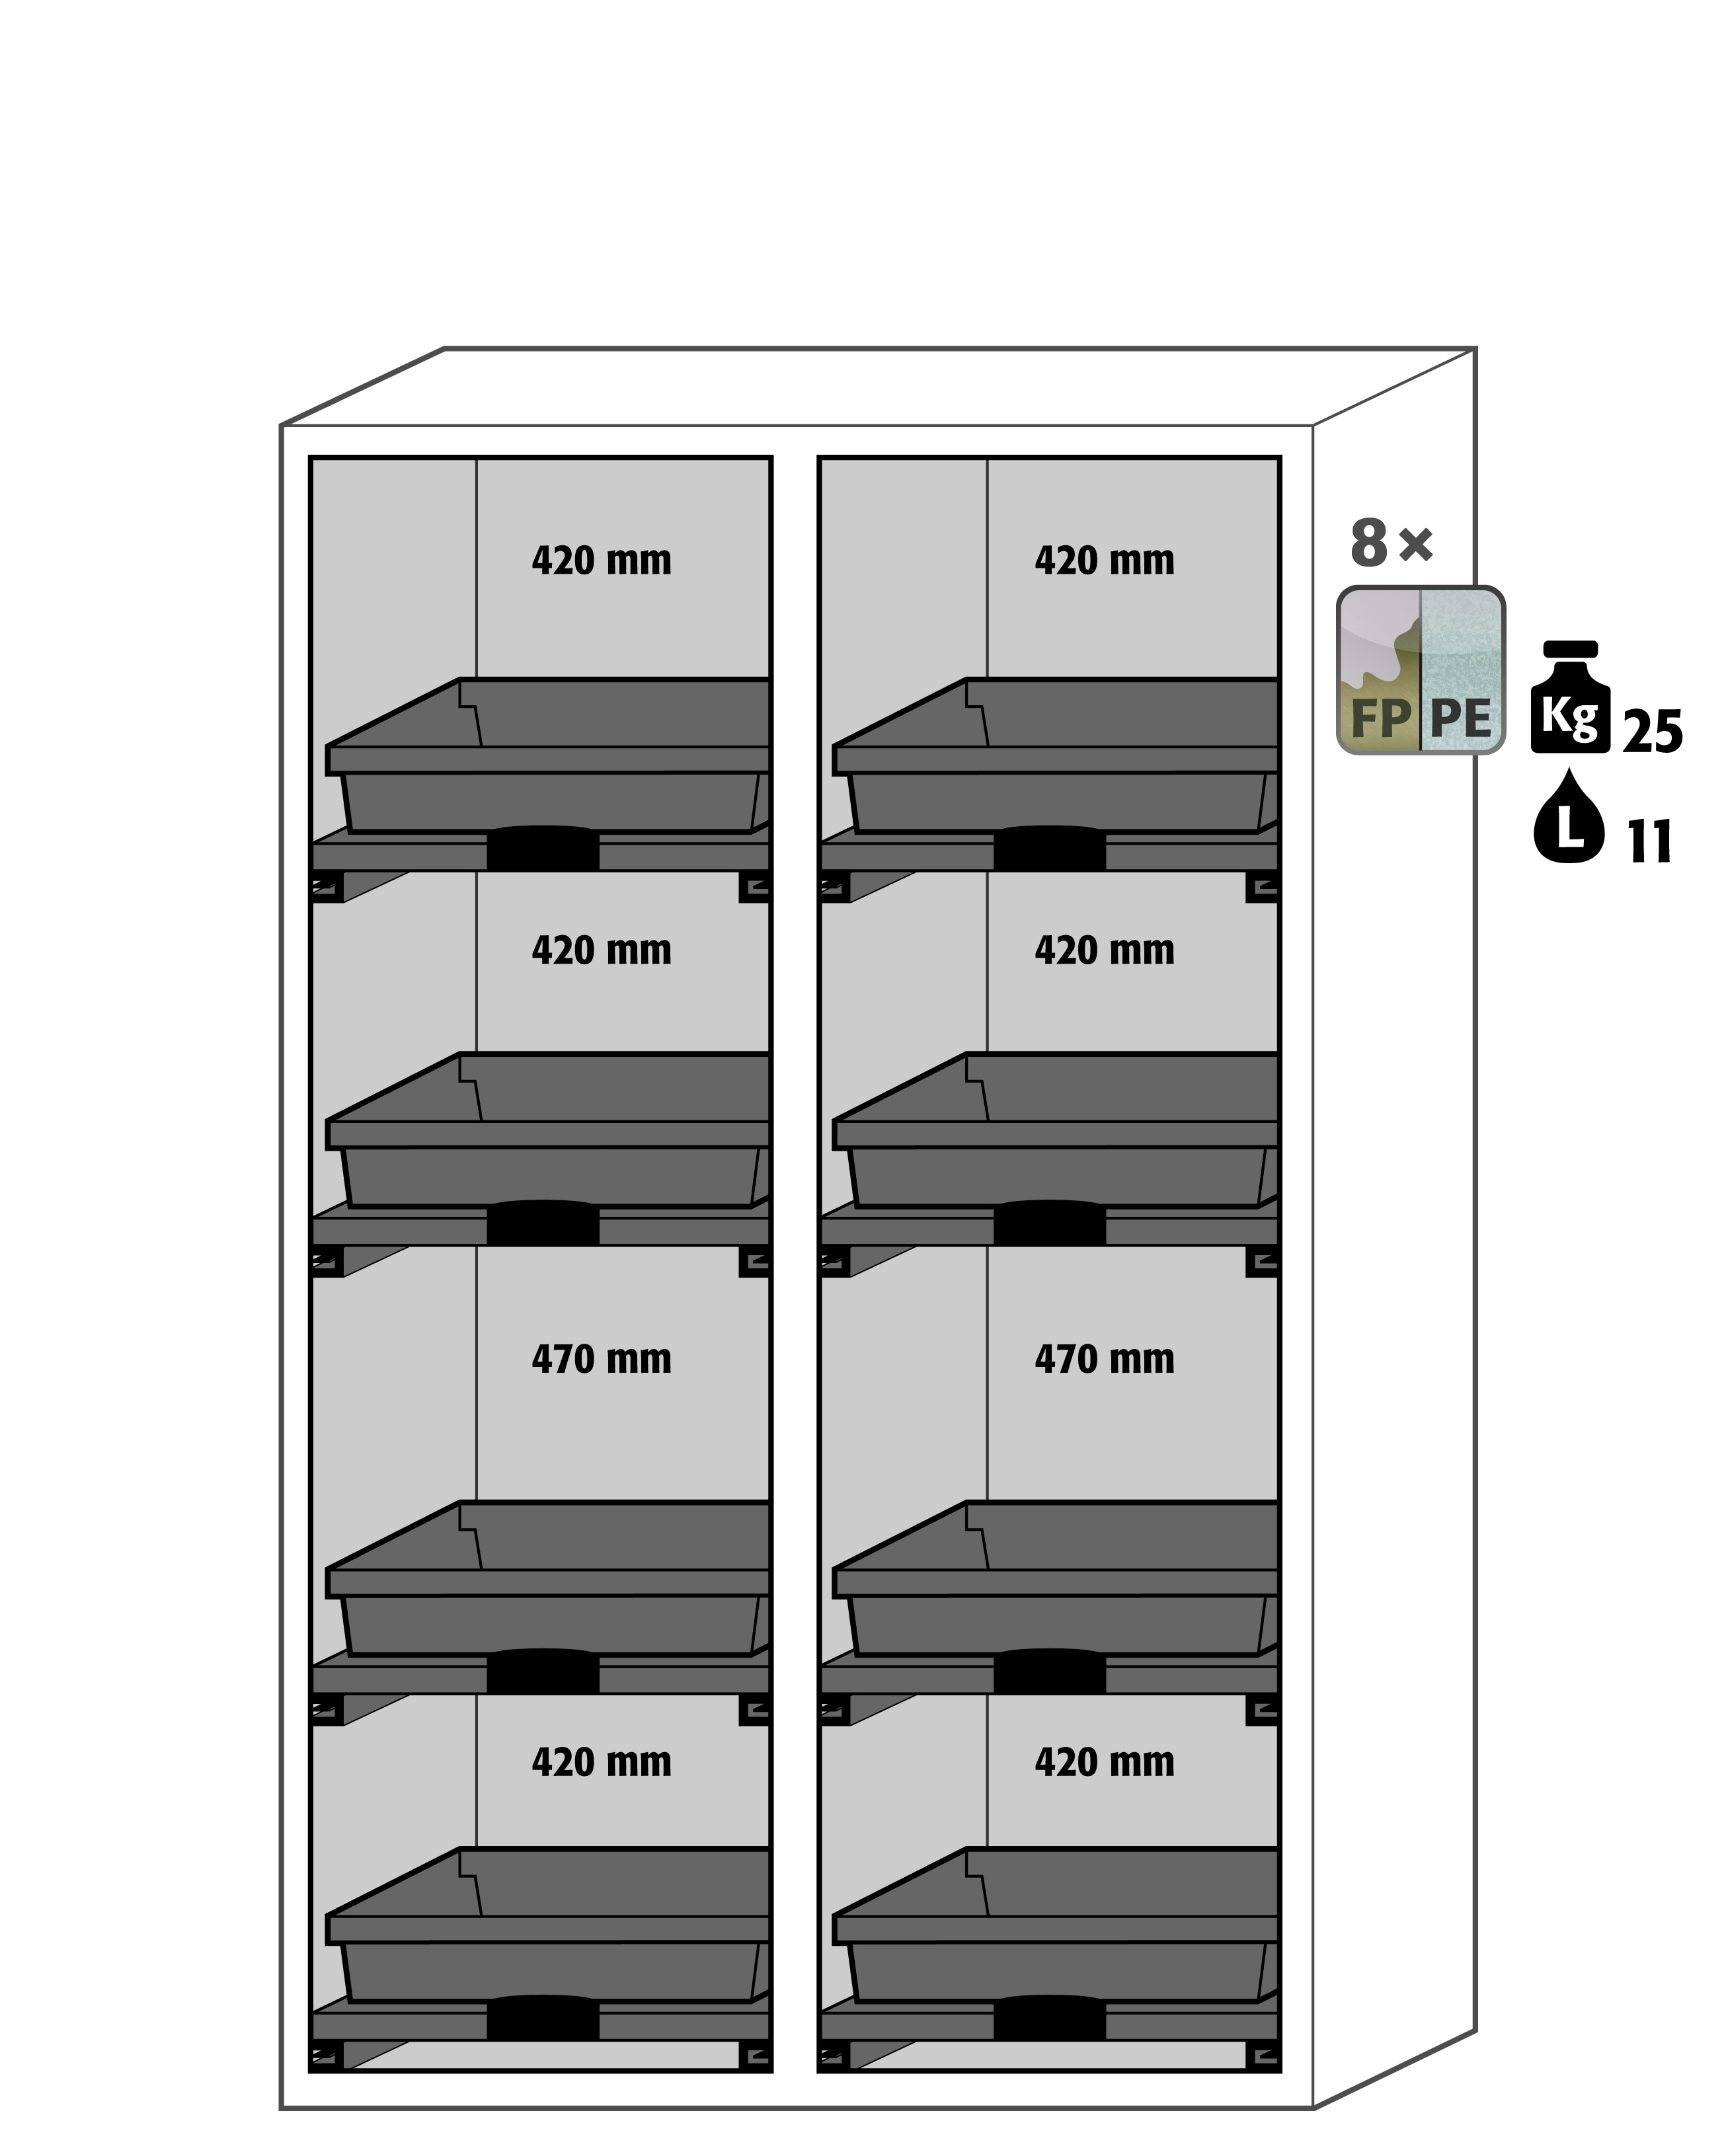 Recirculating Air Filter Storage Cabinet Slx 230 120 Mv 32936